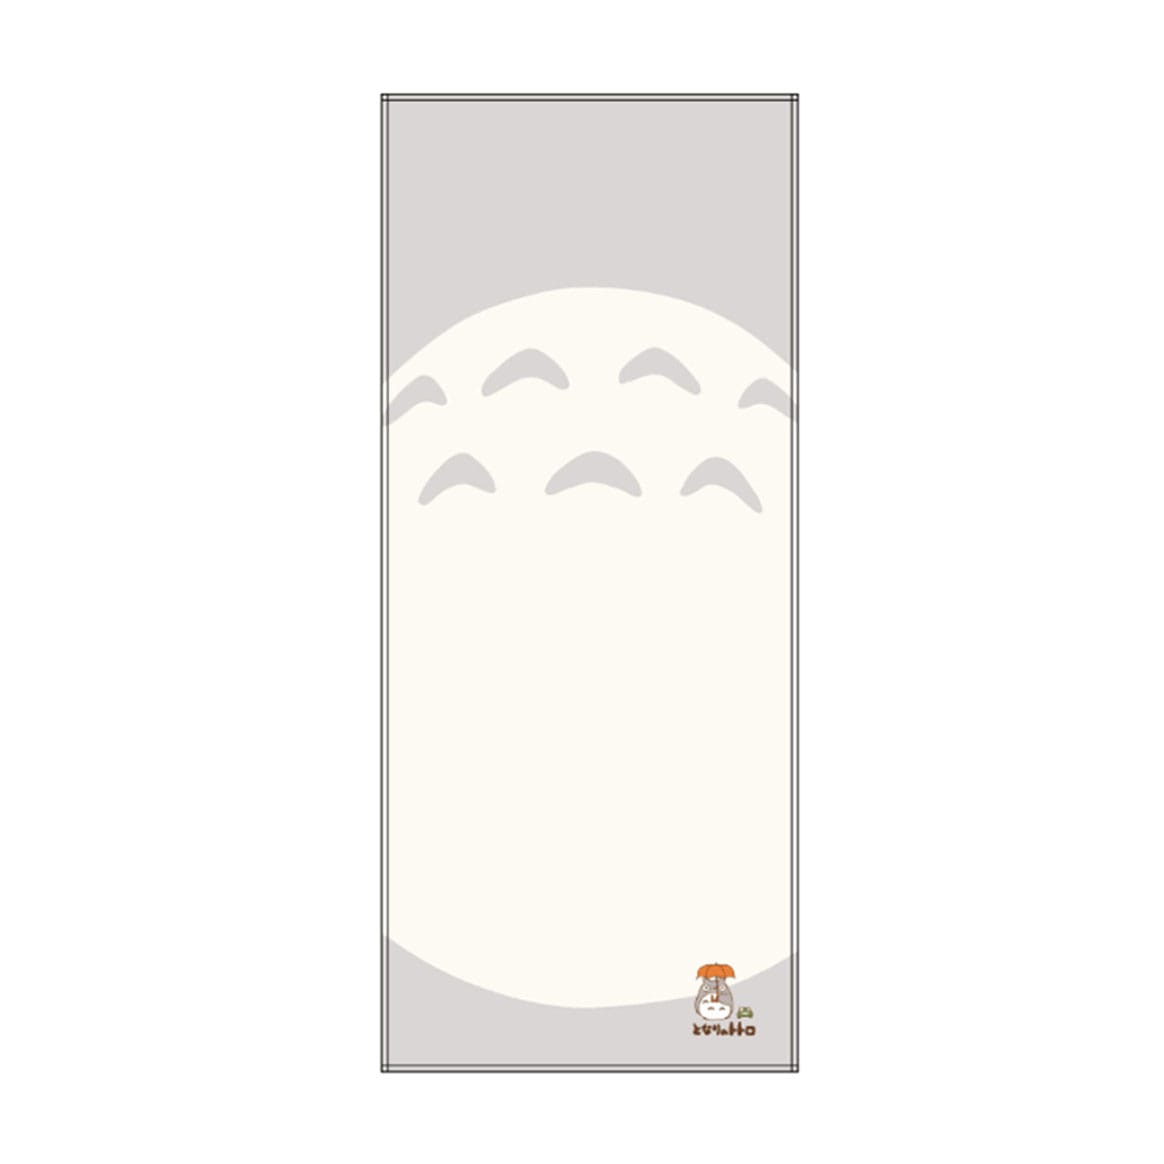 Min Nabo Totoro - Totoro's Belly - håndklæde (Forudbestilling)